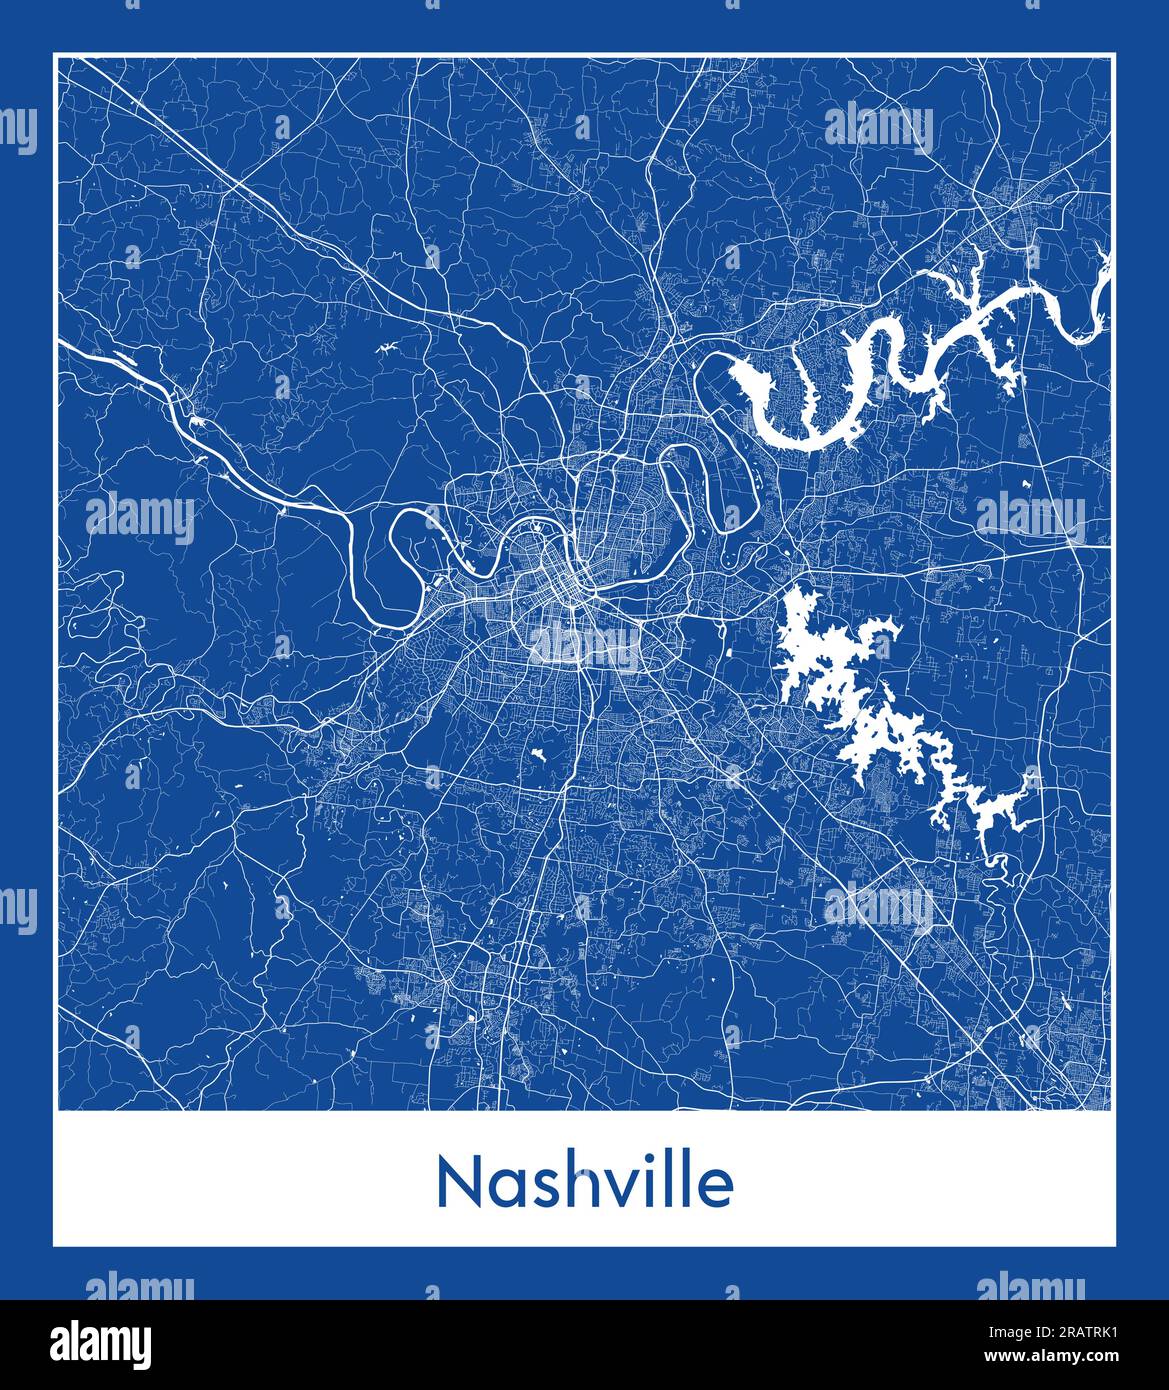 Nashville United States North America City Karte blau bedruckte Vektordarstellung Stock Vektor